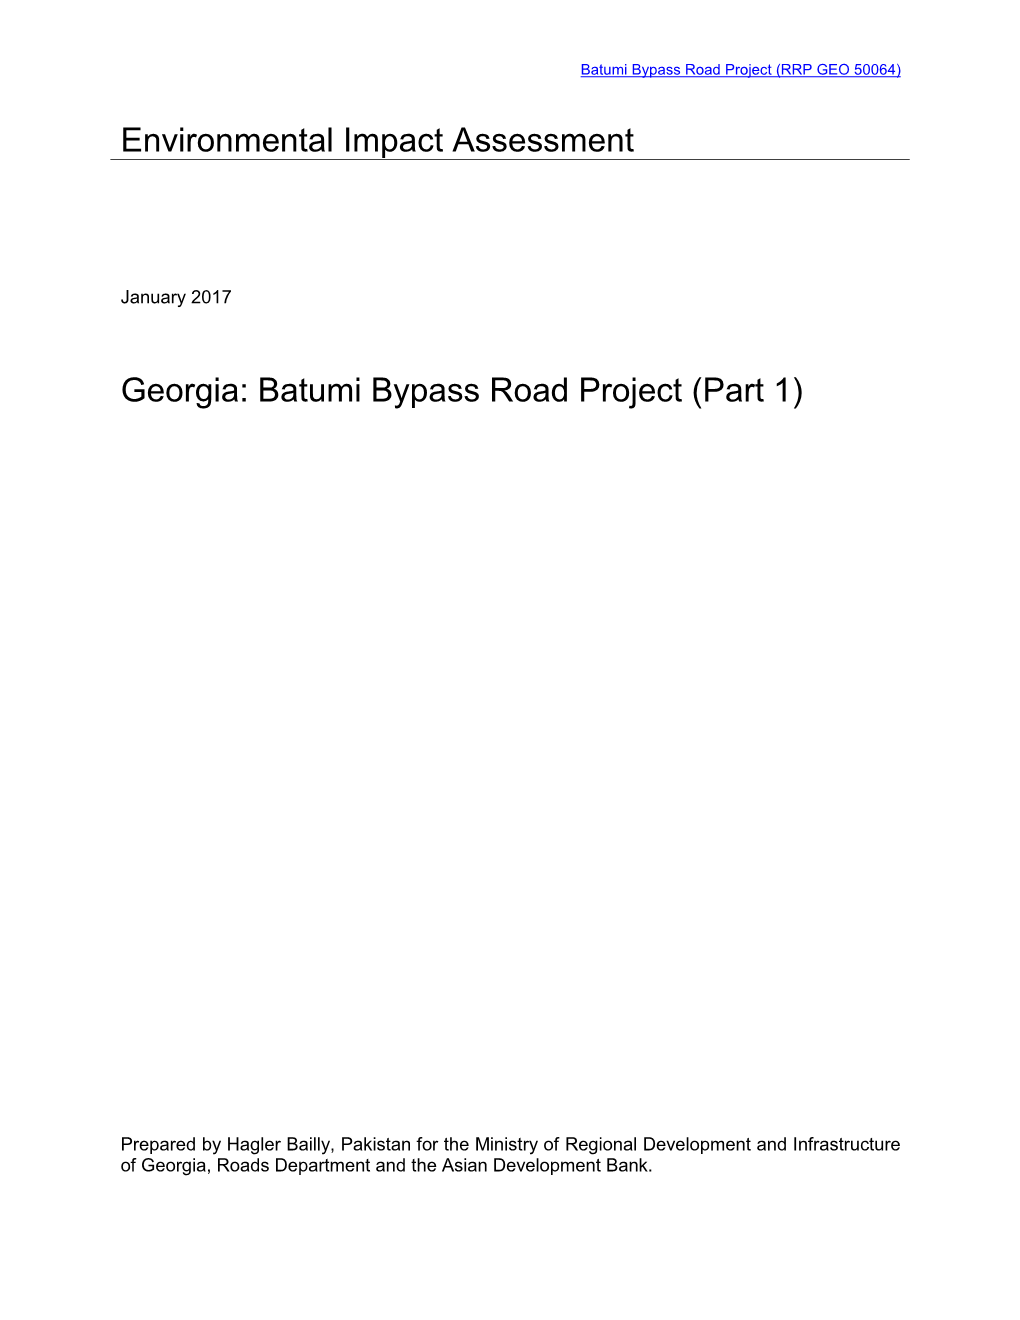 Environmental Impact Assessment Georgia